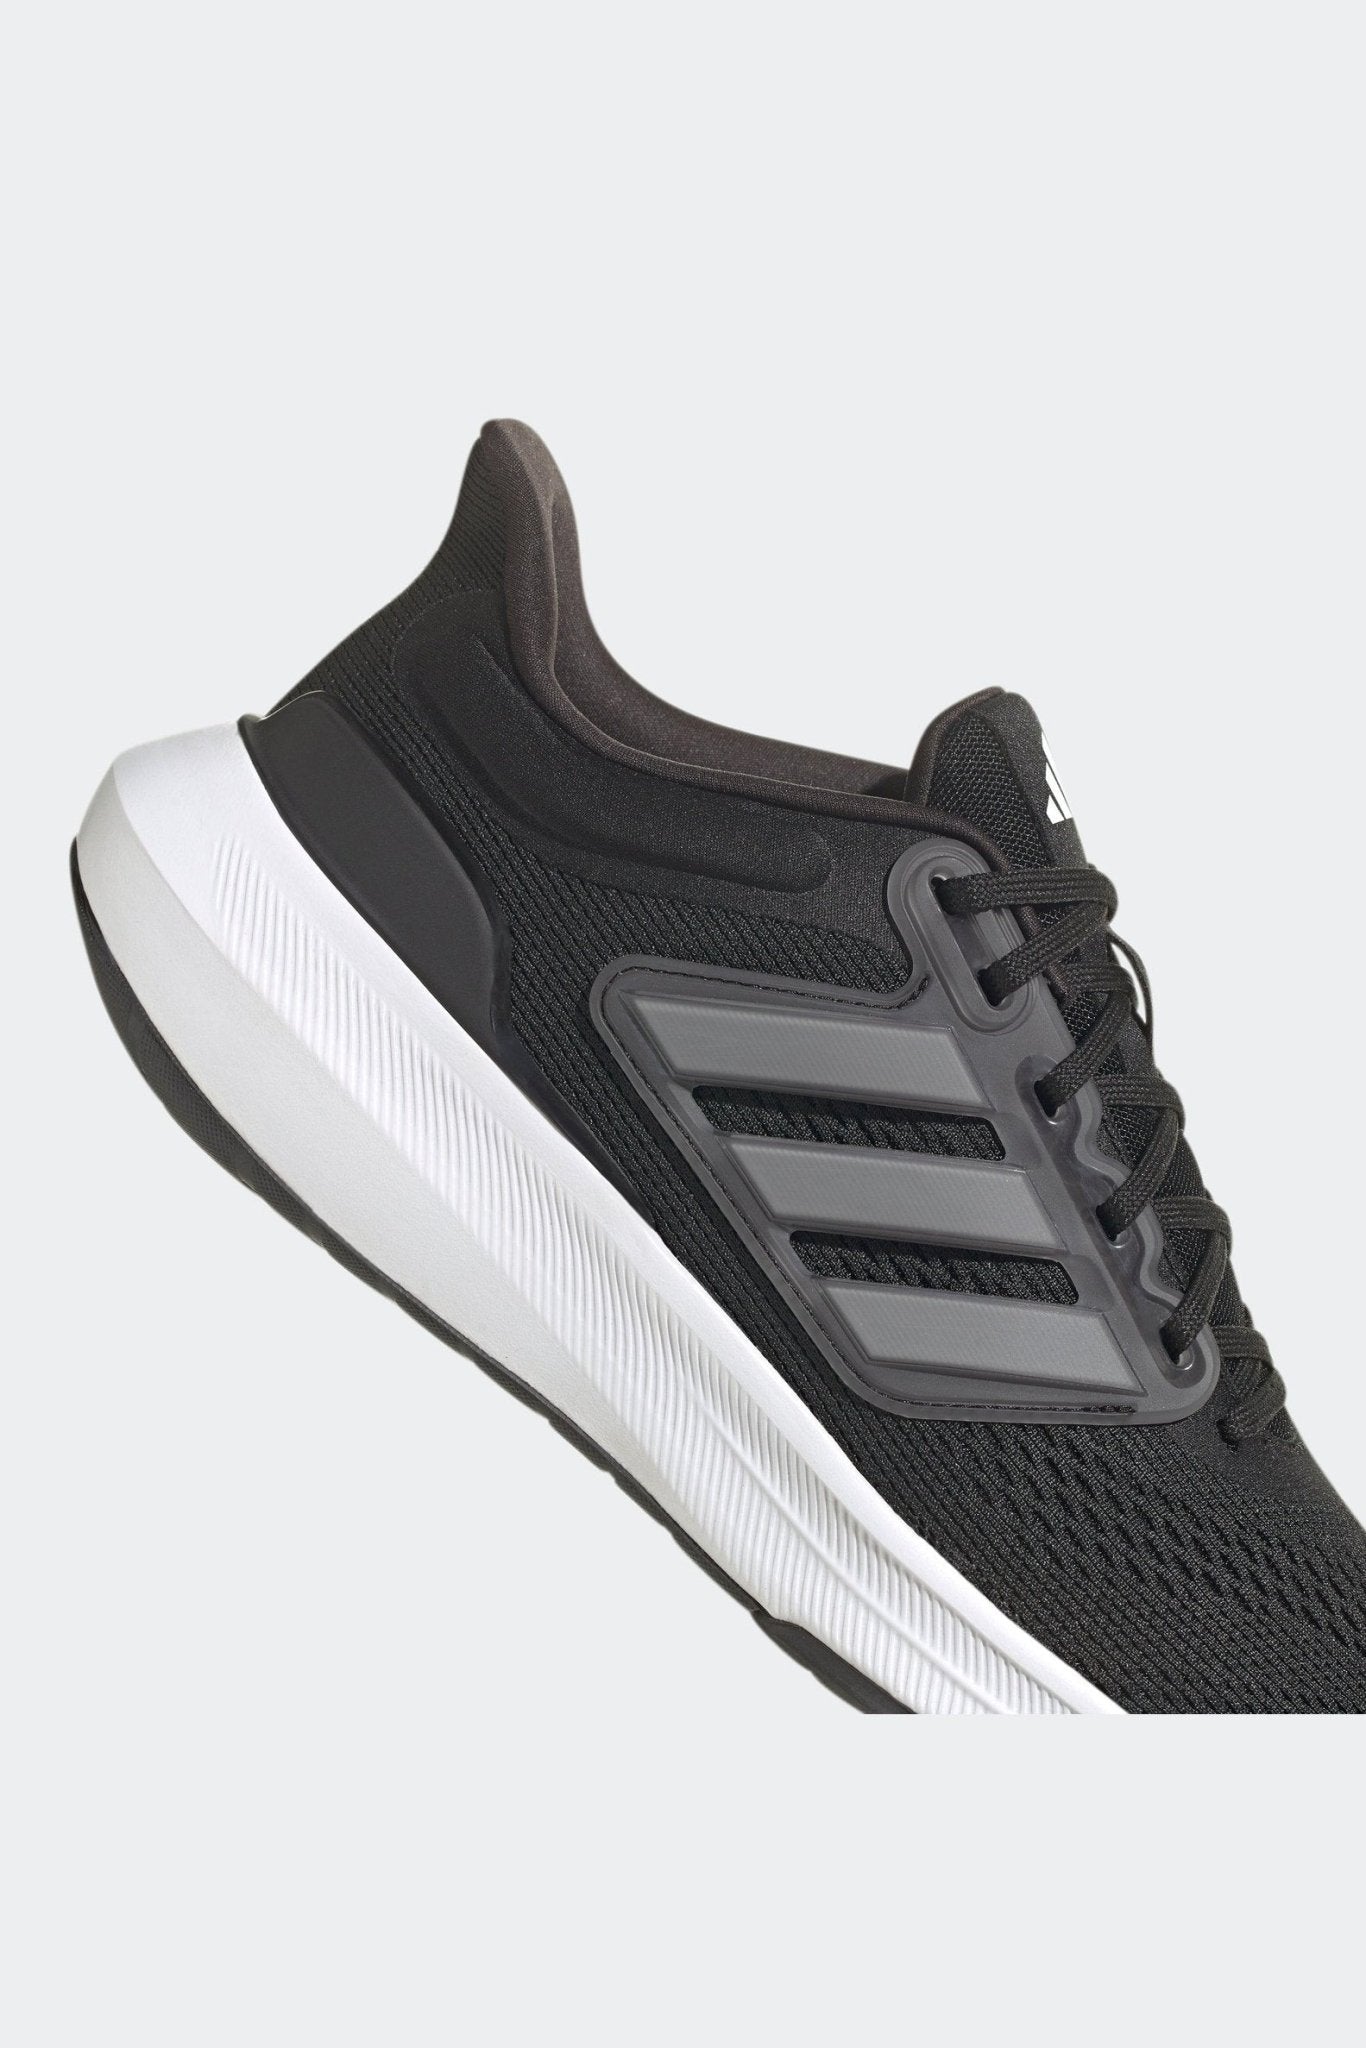 ADIDAS - נעלי ריצה לגבר ULTRABOUNCE בצבע שחור - MASHBIR//365